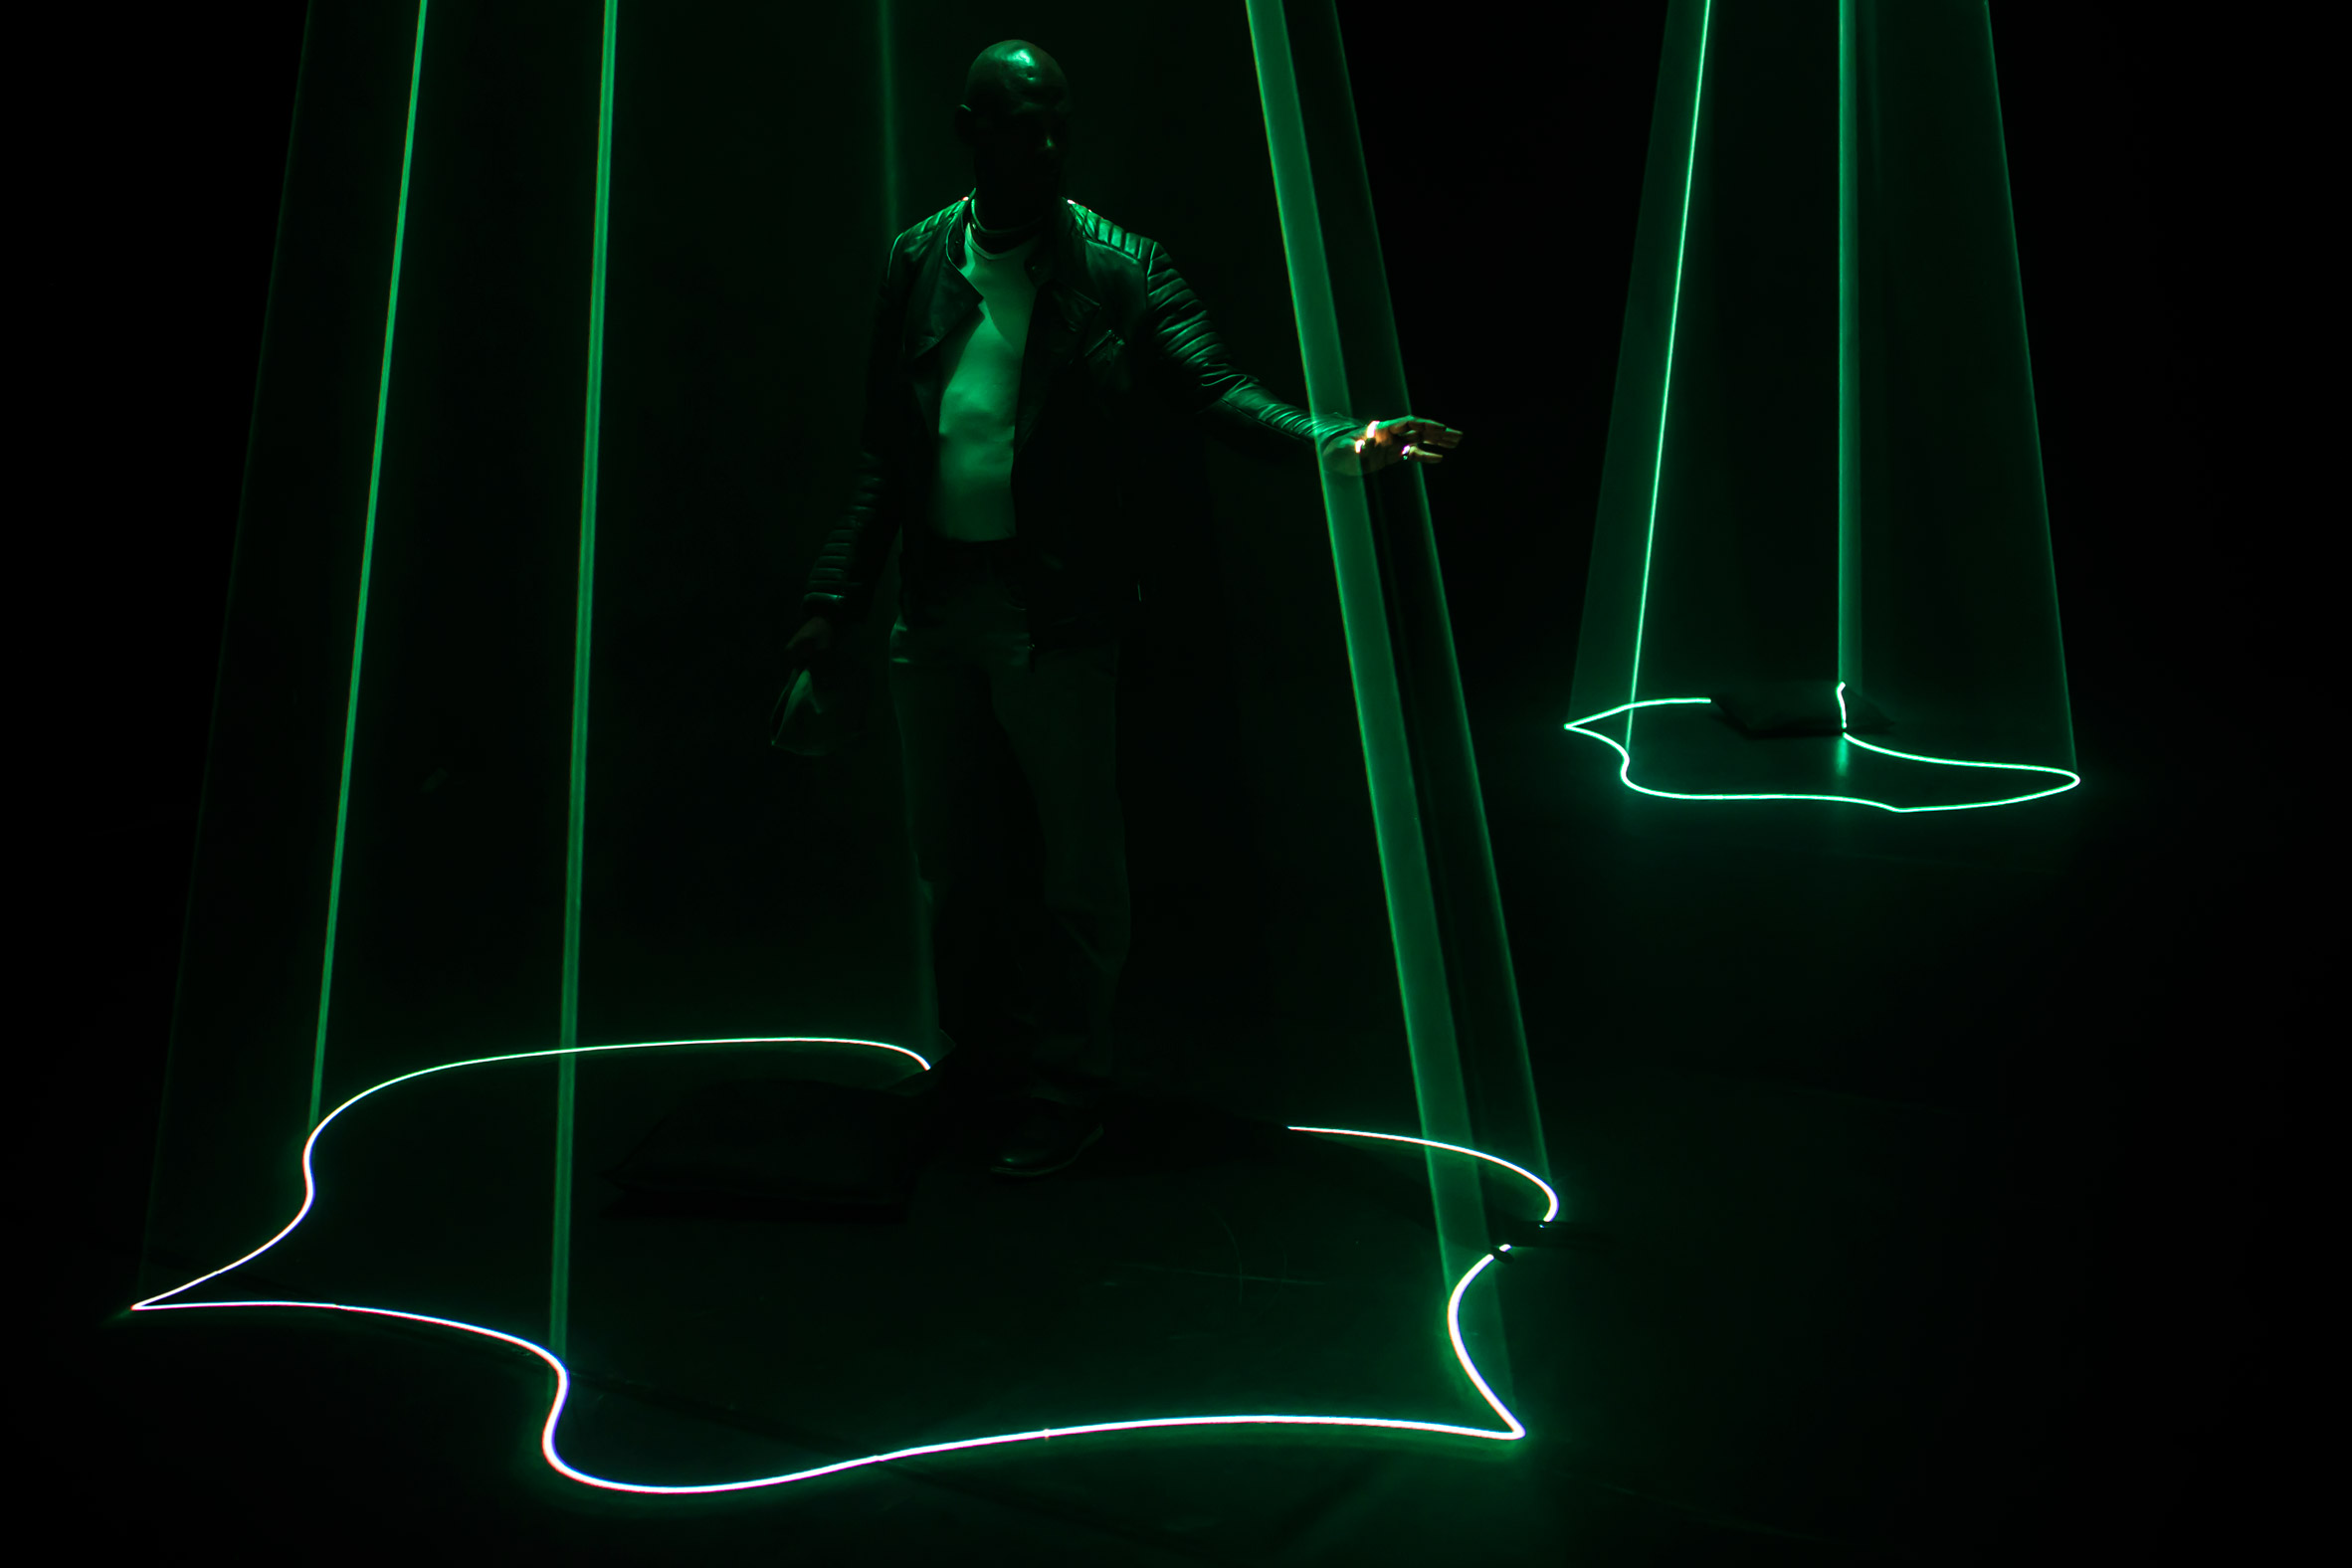 Audiovisual installation emotions into beams of